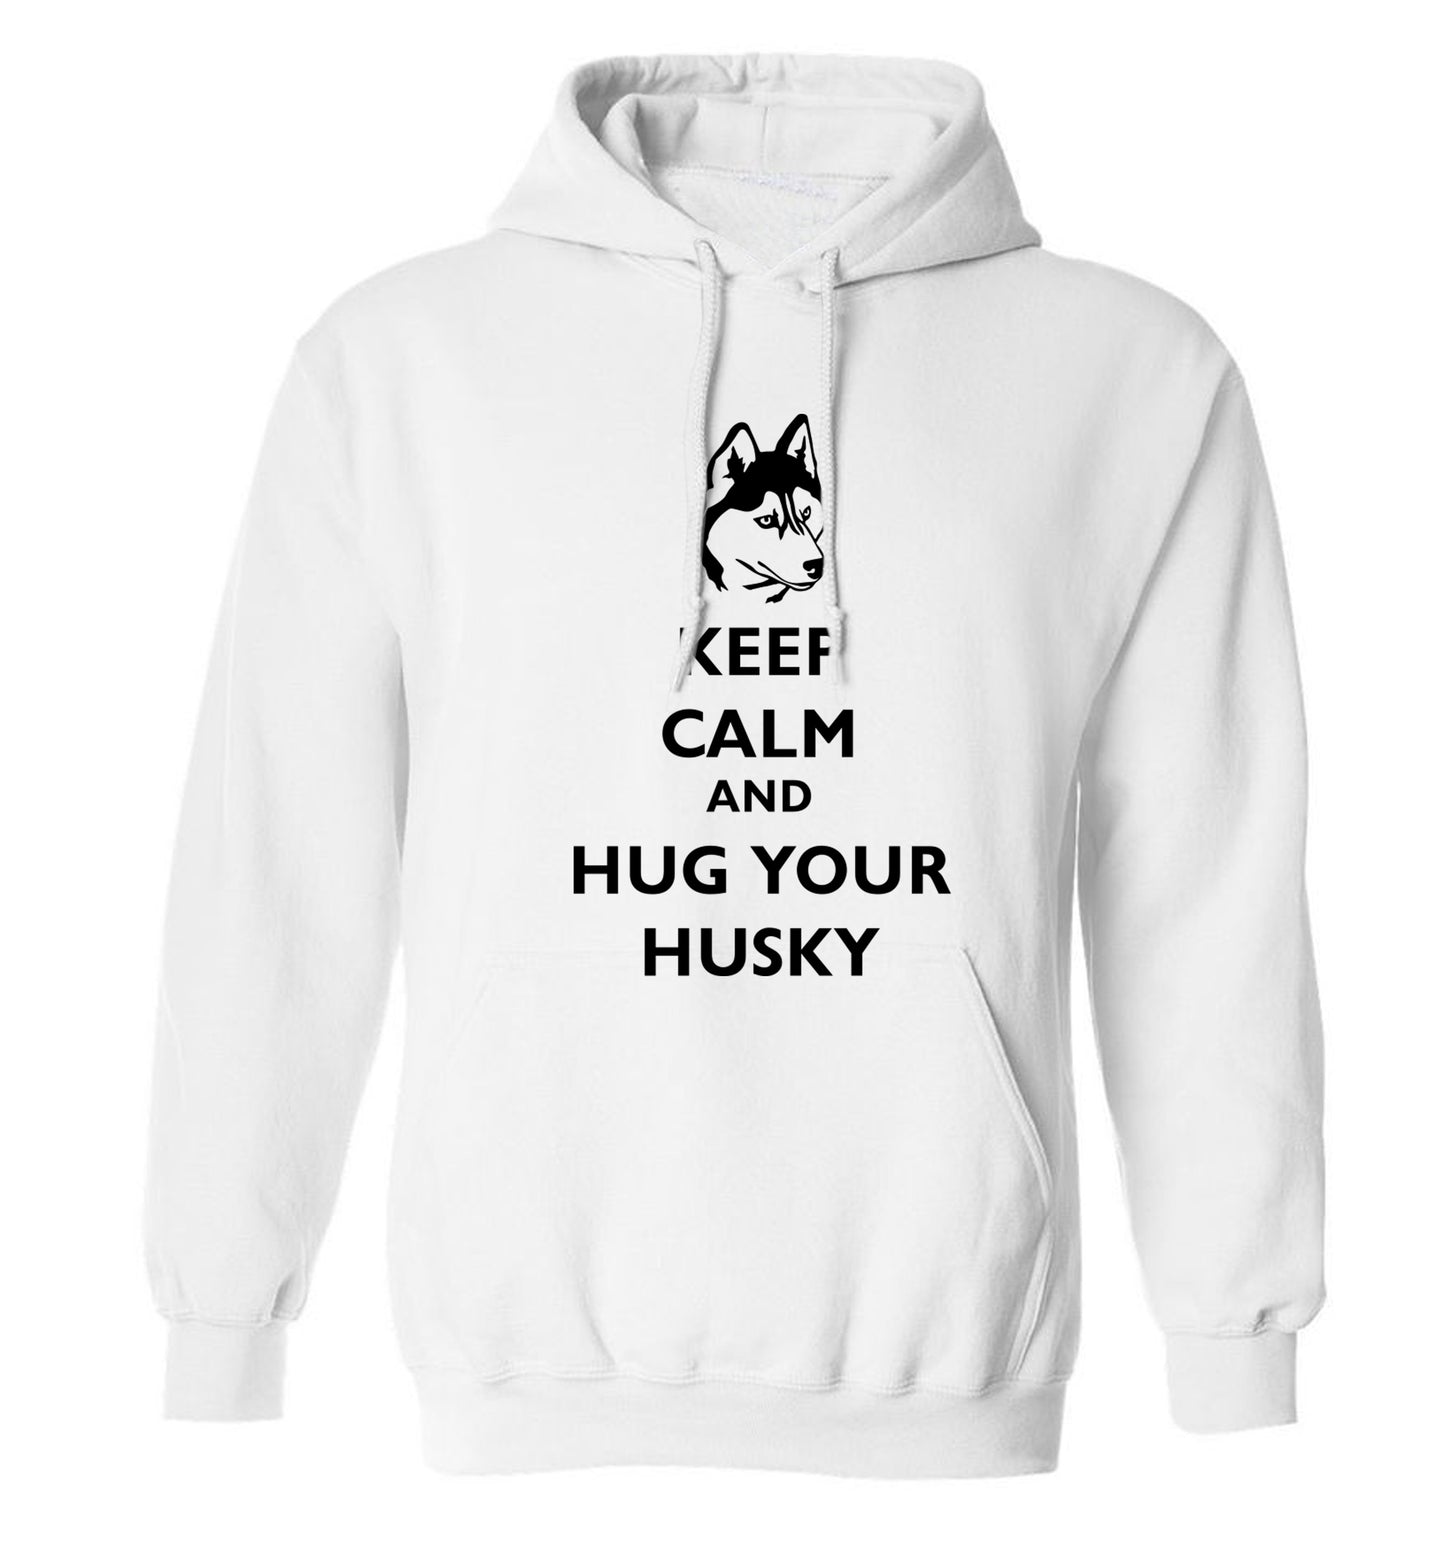 Keep calm and hug your husky adults unisex white hoodie 2XL